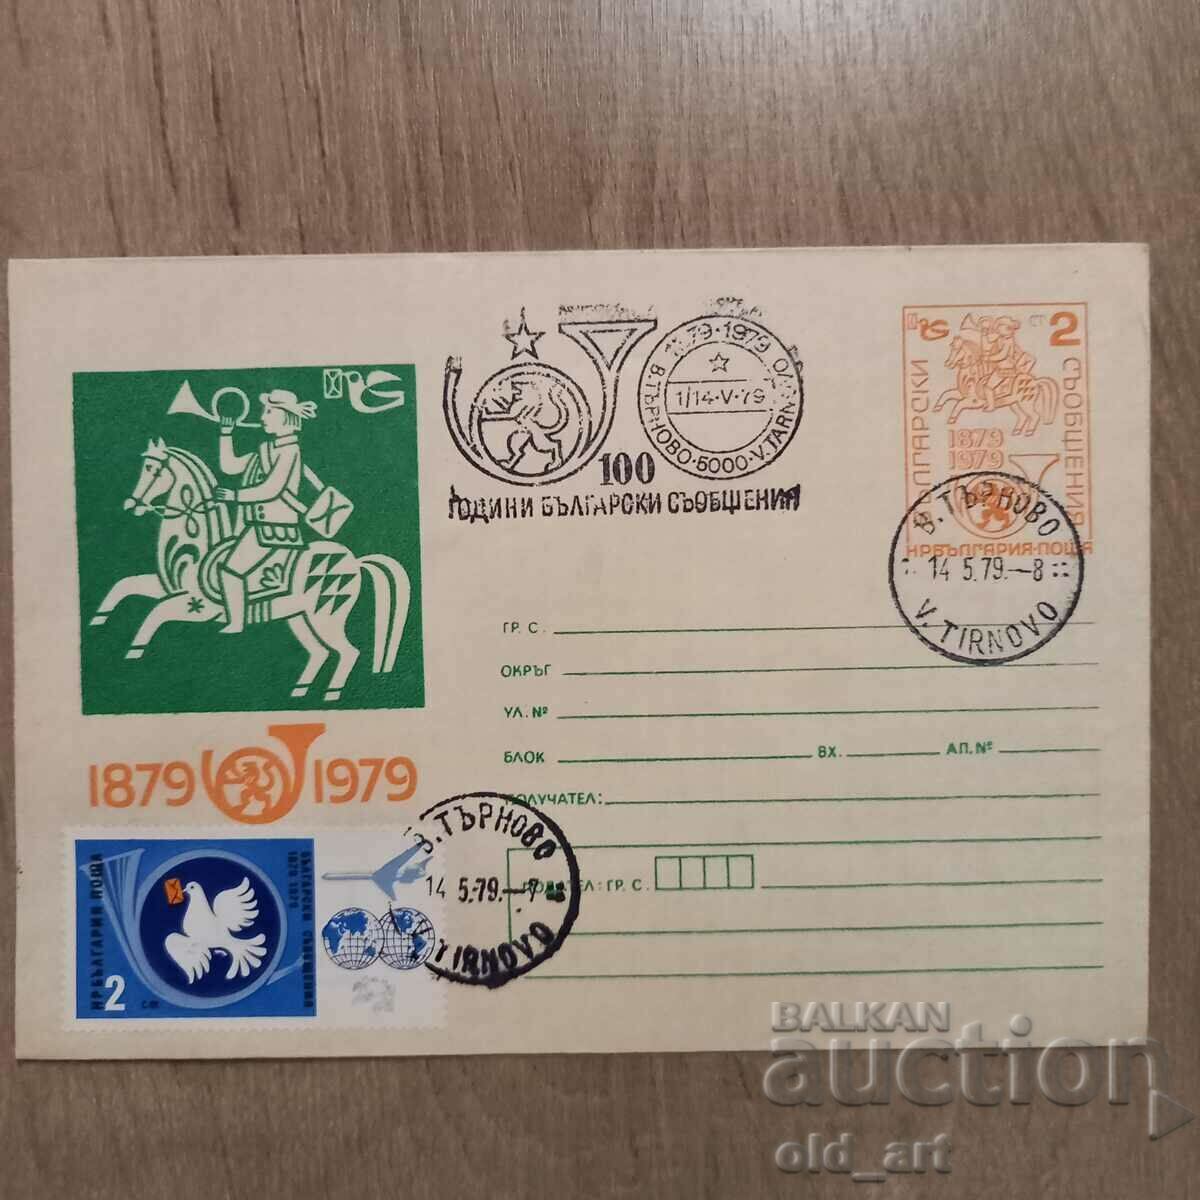 Postal envelope - 100 years of Bulgarian messages